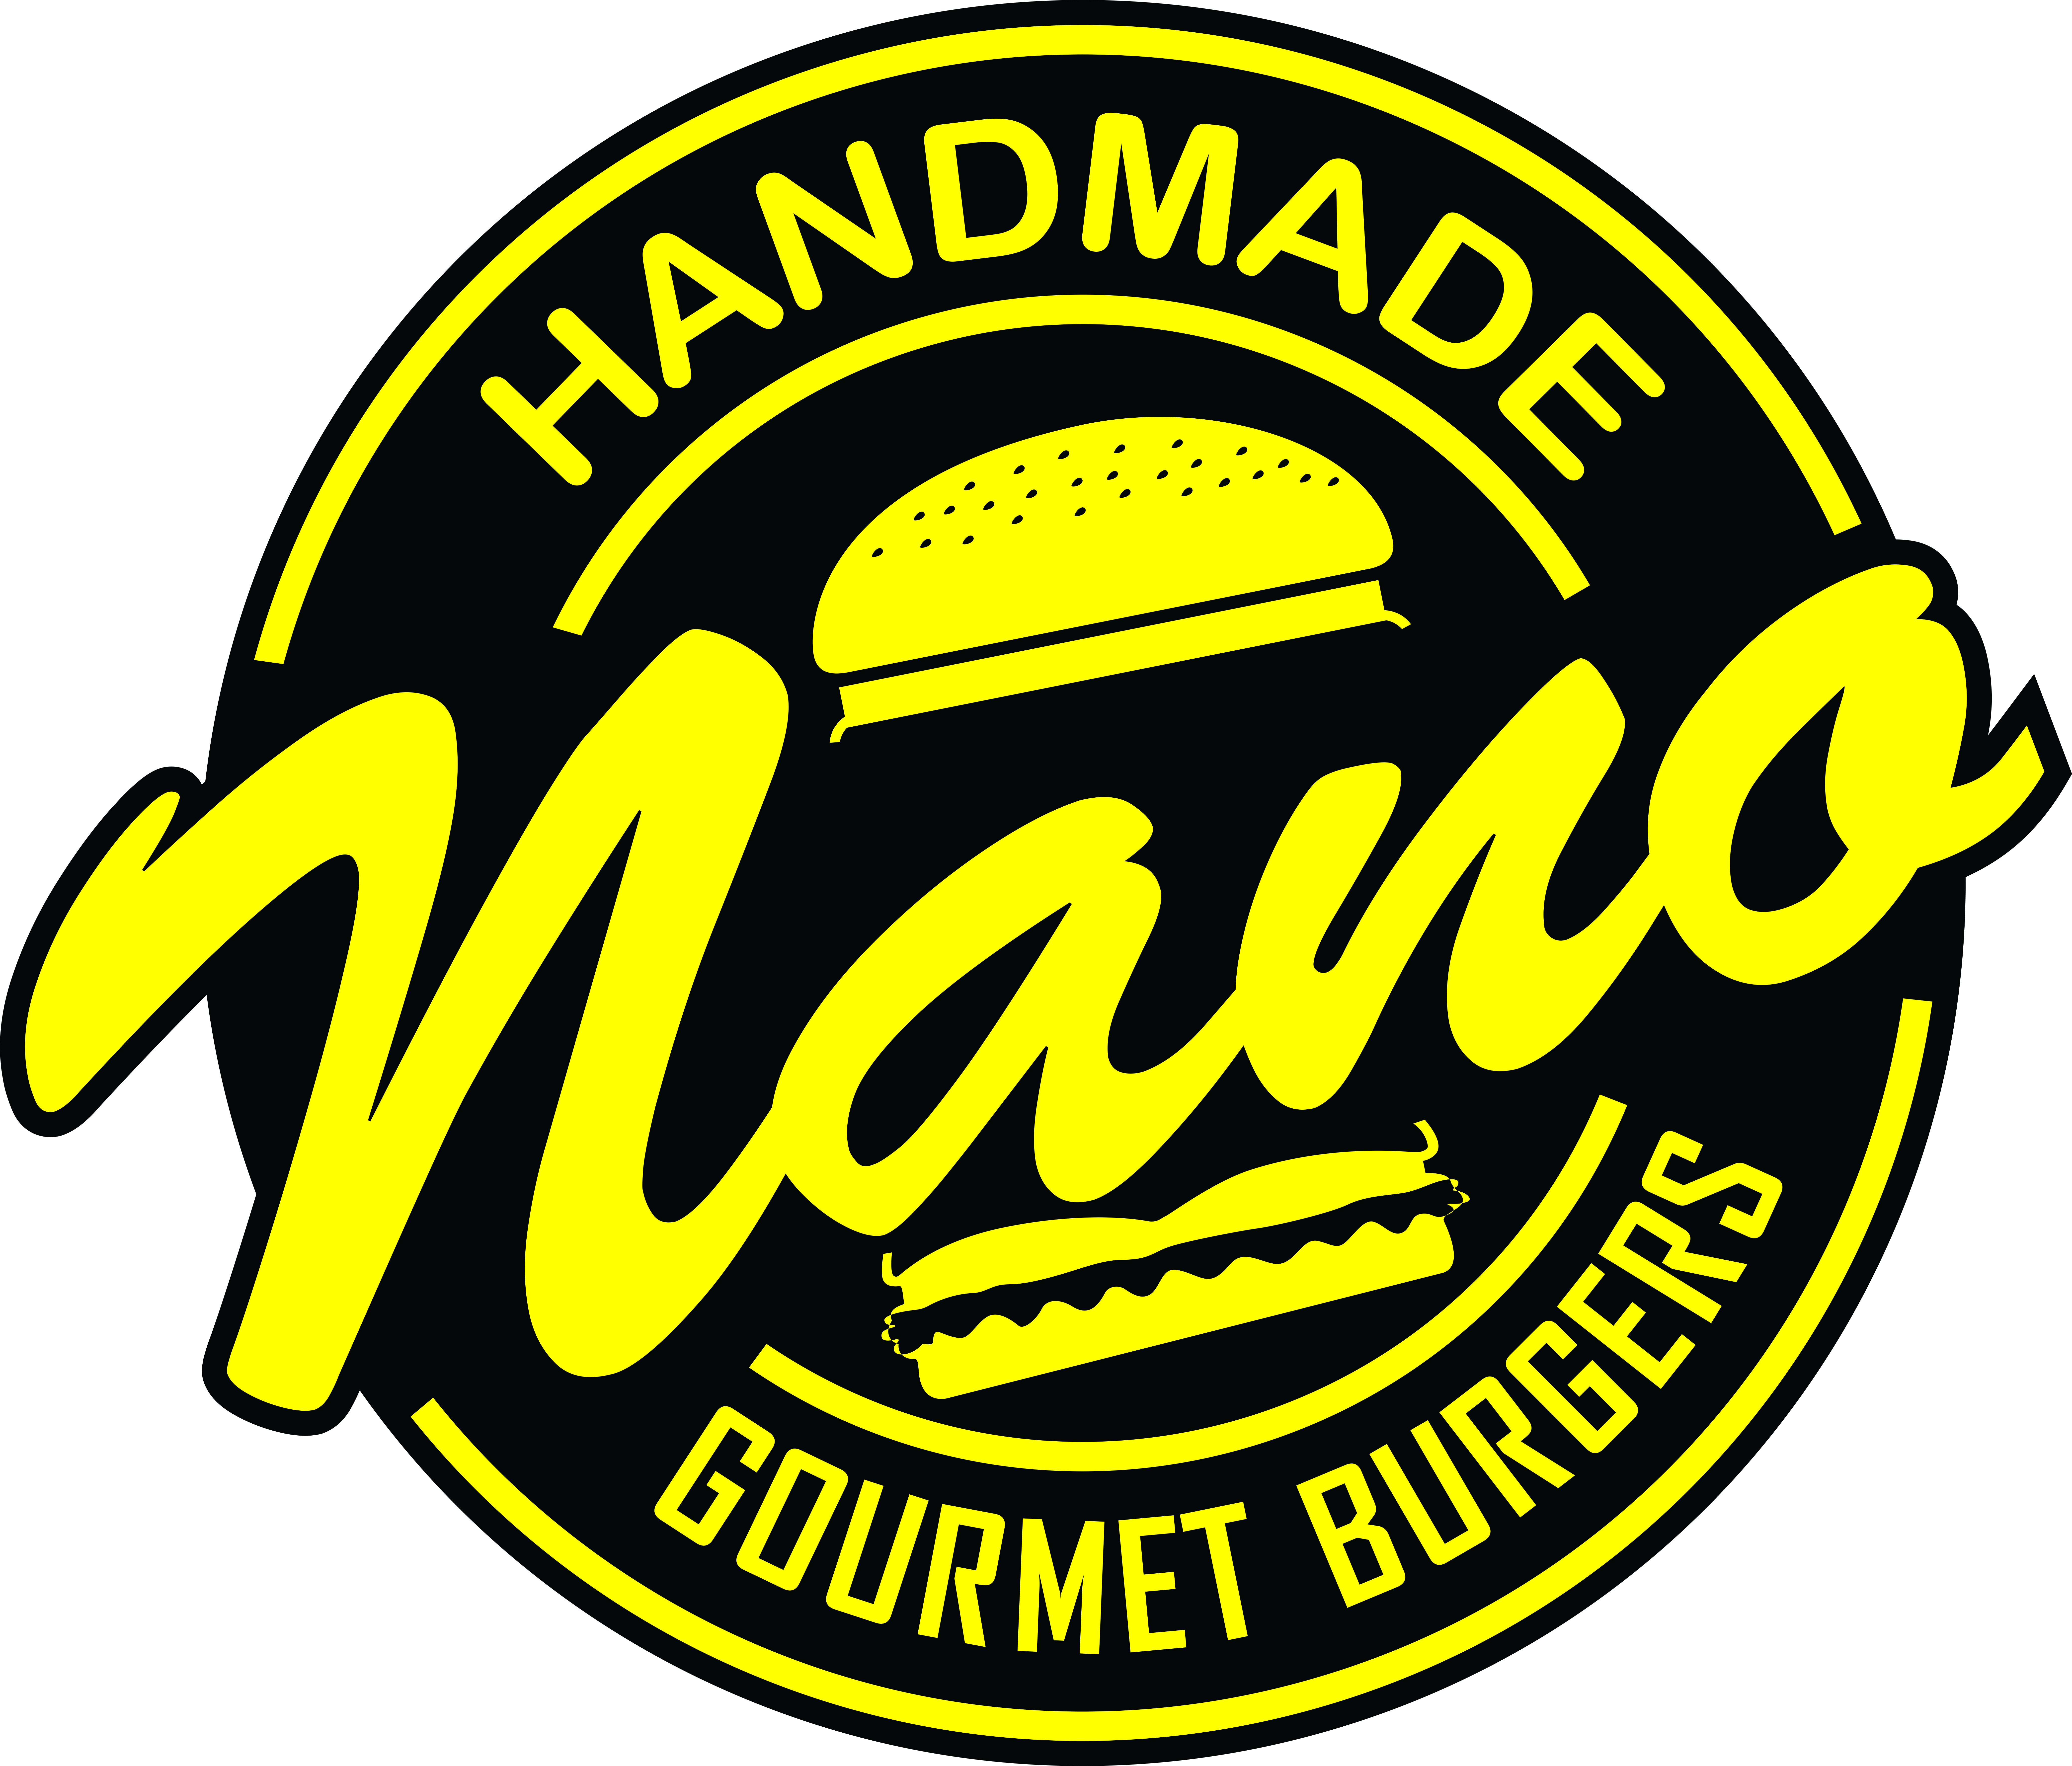 Nano Burger